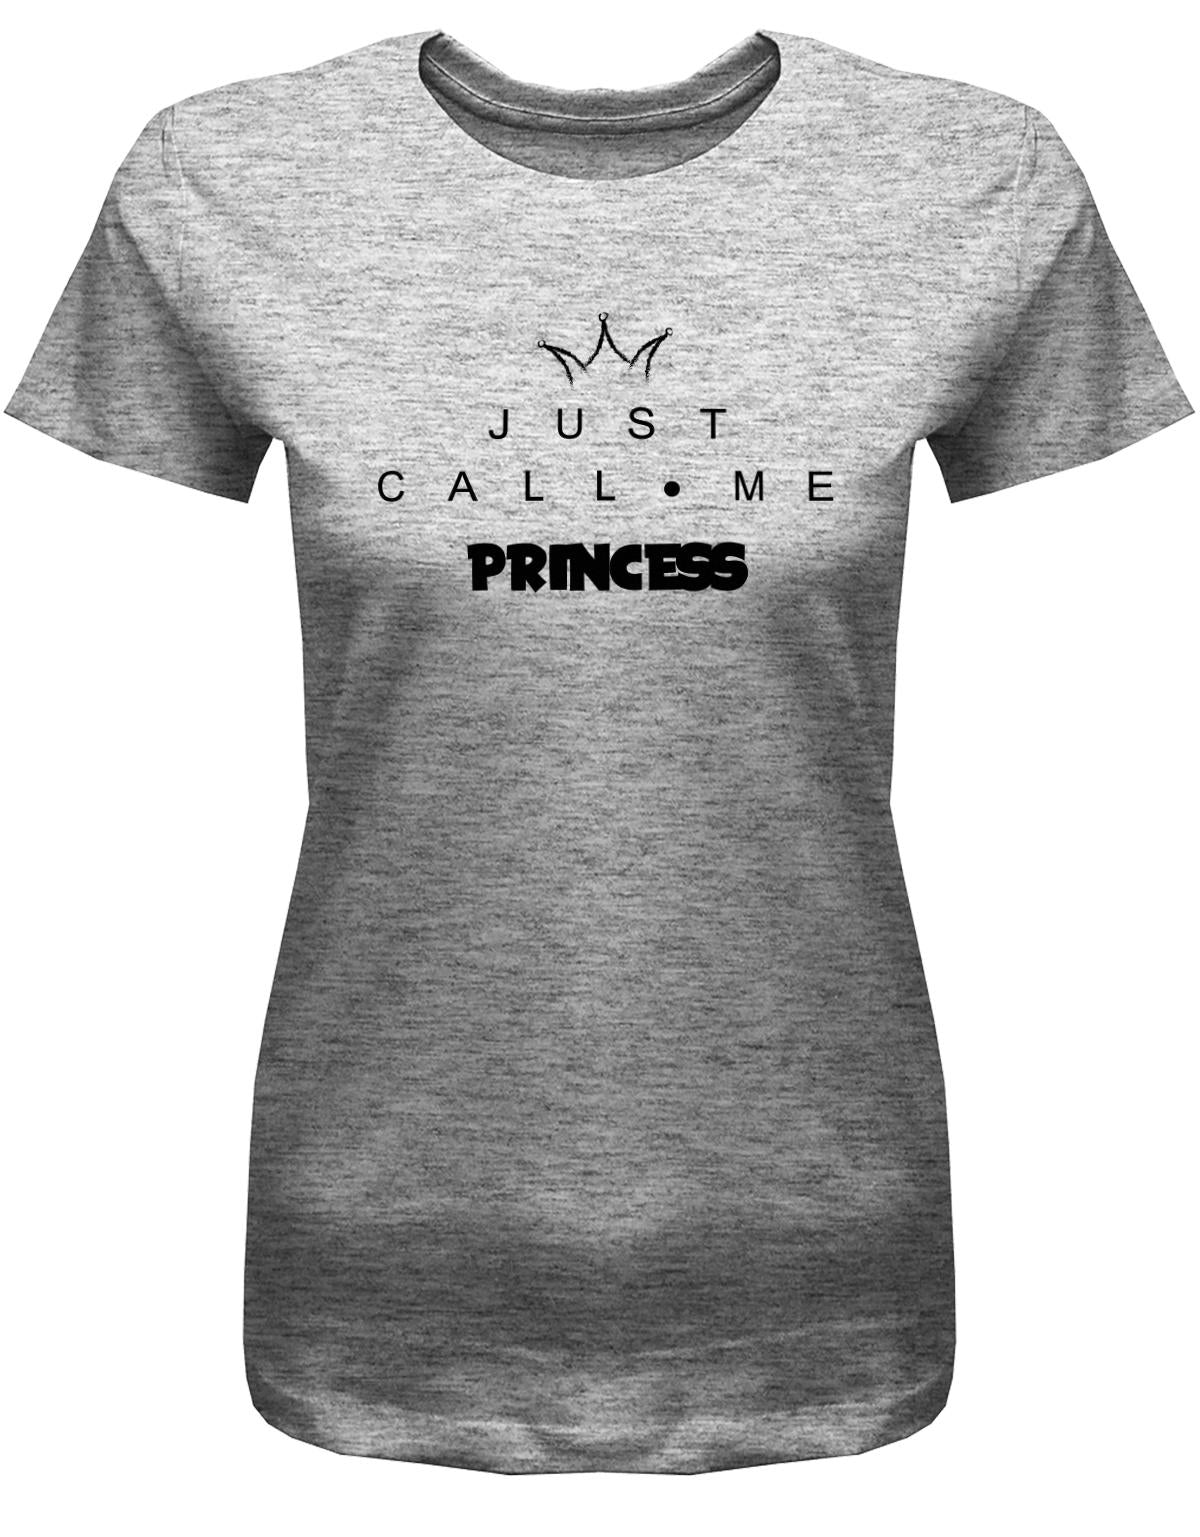 Just-call-me-Princess-Damen-Shirt-grau